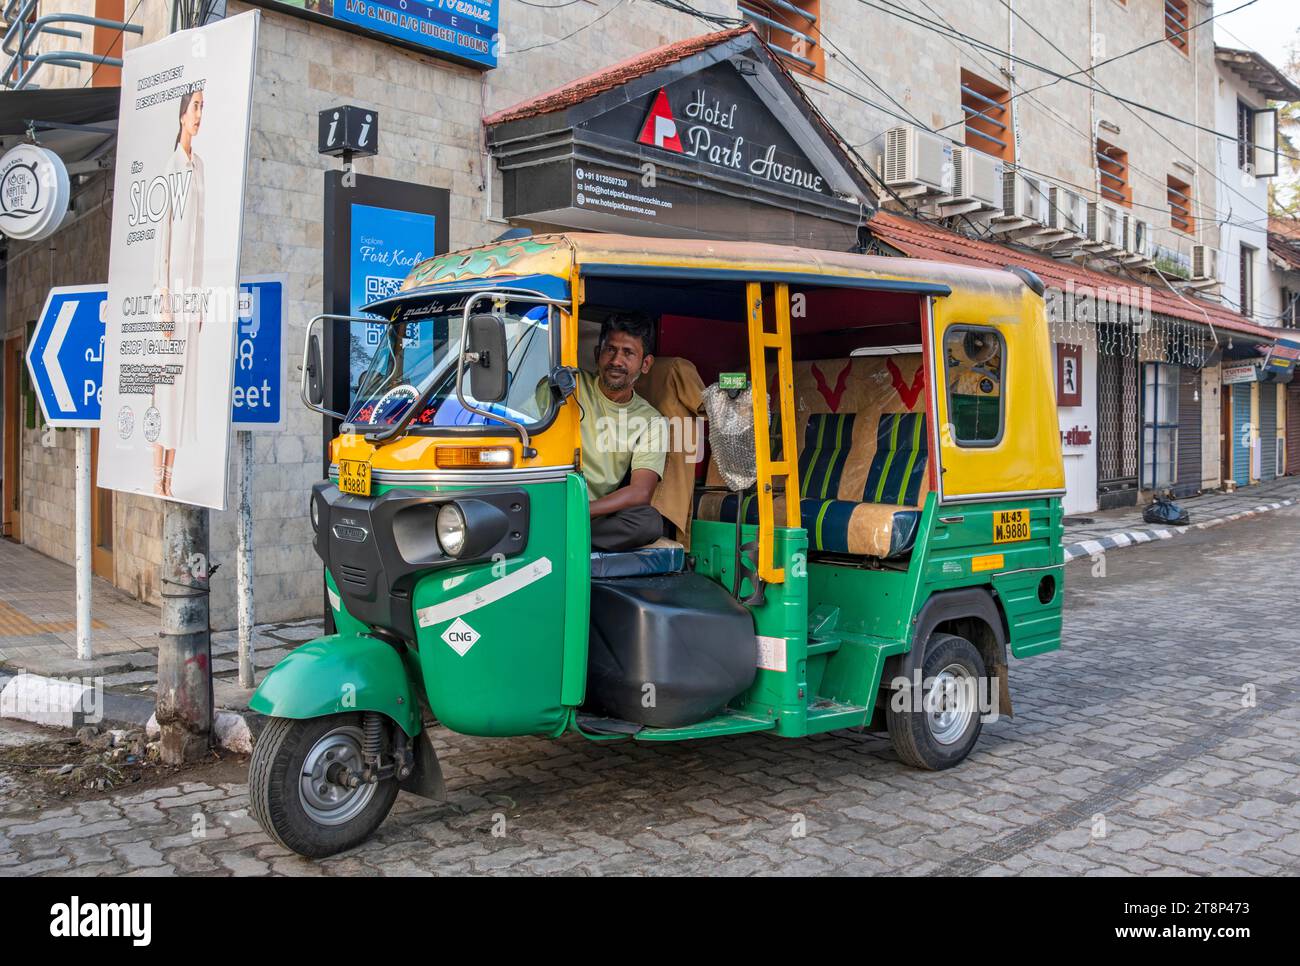 Auto-rickshaw driver, Fort Kochi, Cochin, Kerala, India Stock Photo